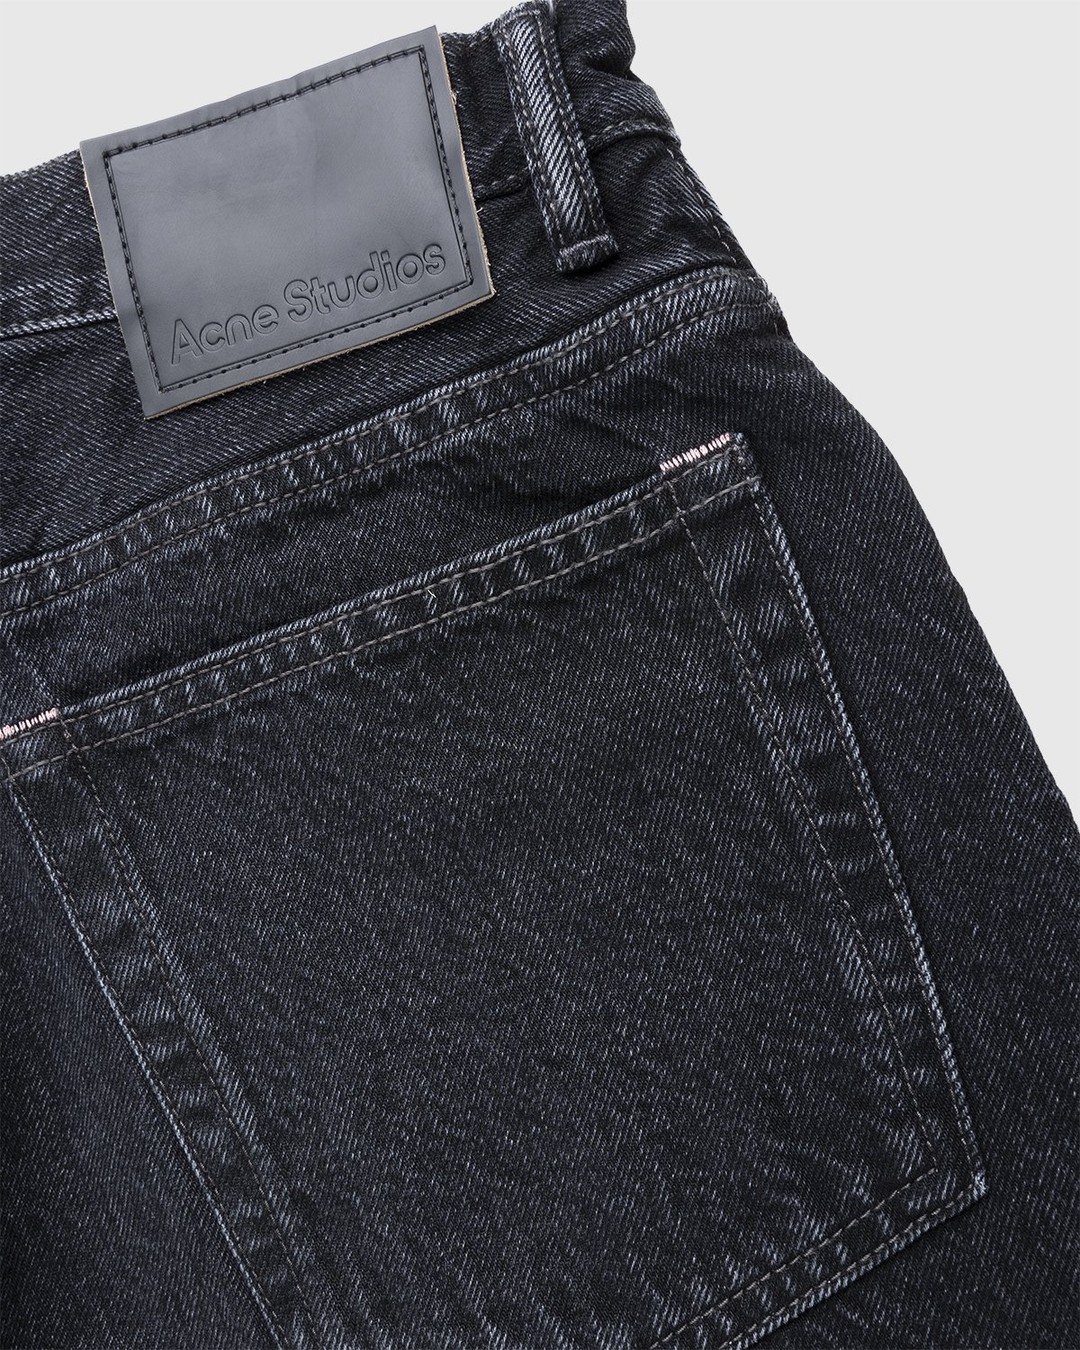 Acne Studios – Brutus 2021M Boot Cut Jeans Black - Pants - Black - Image 3